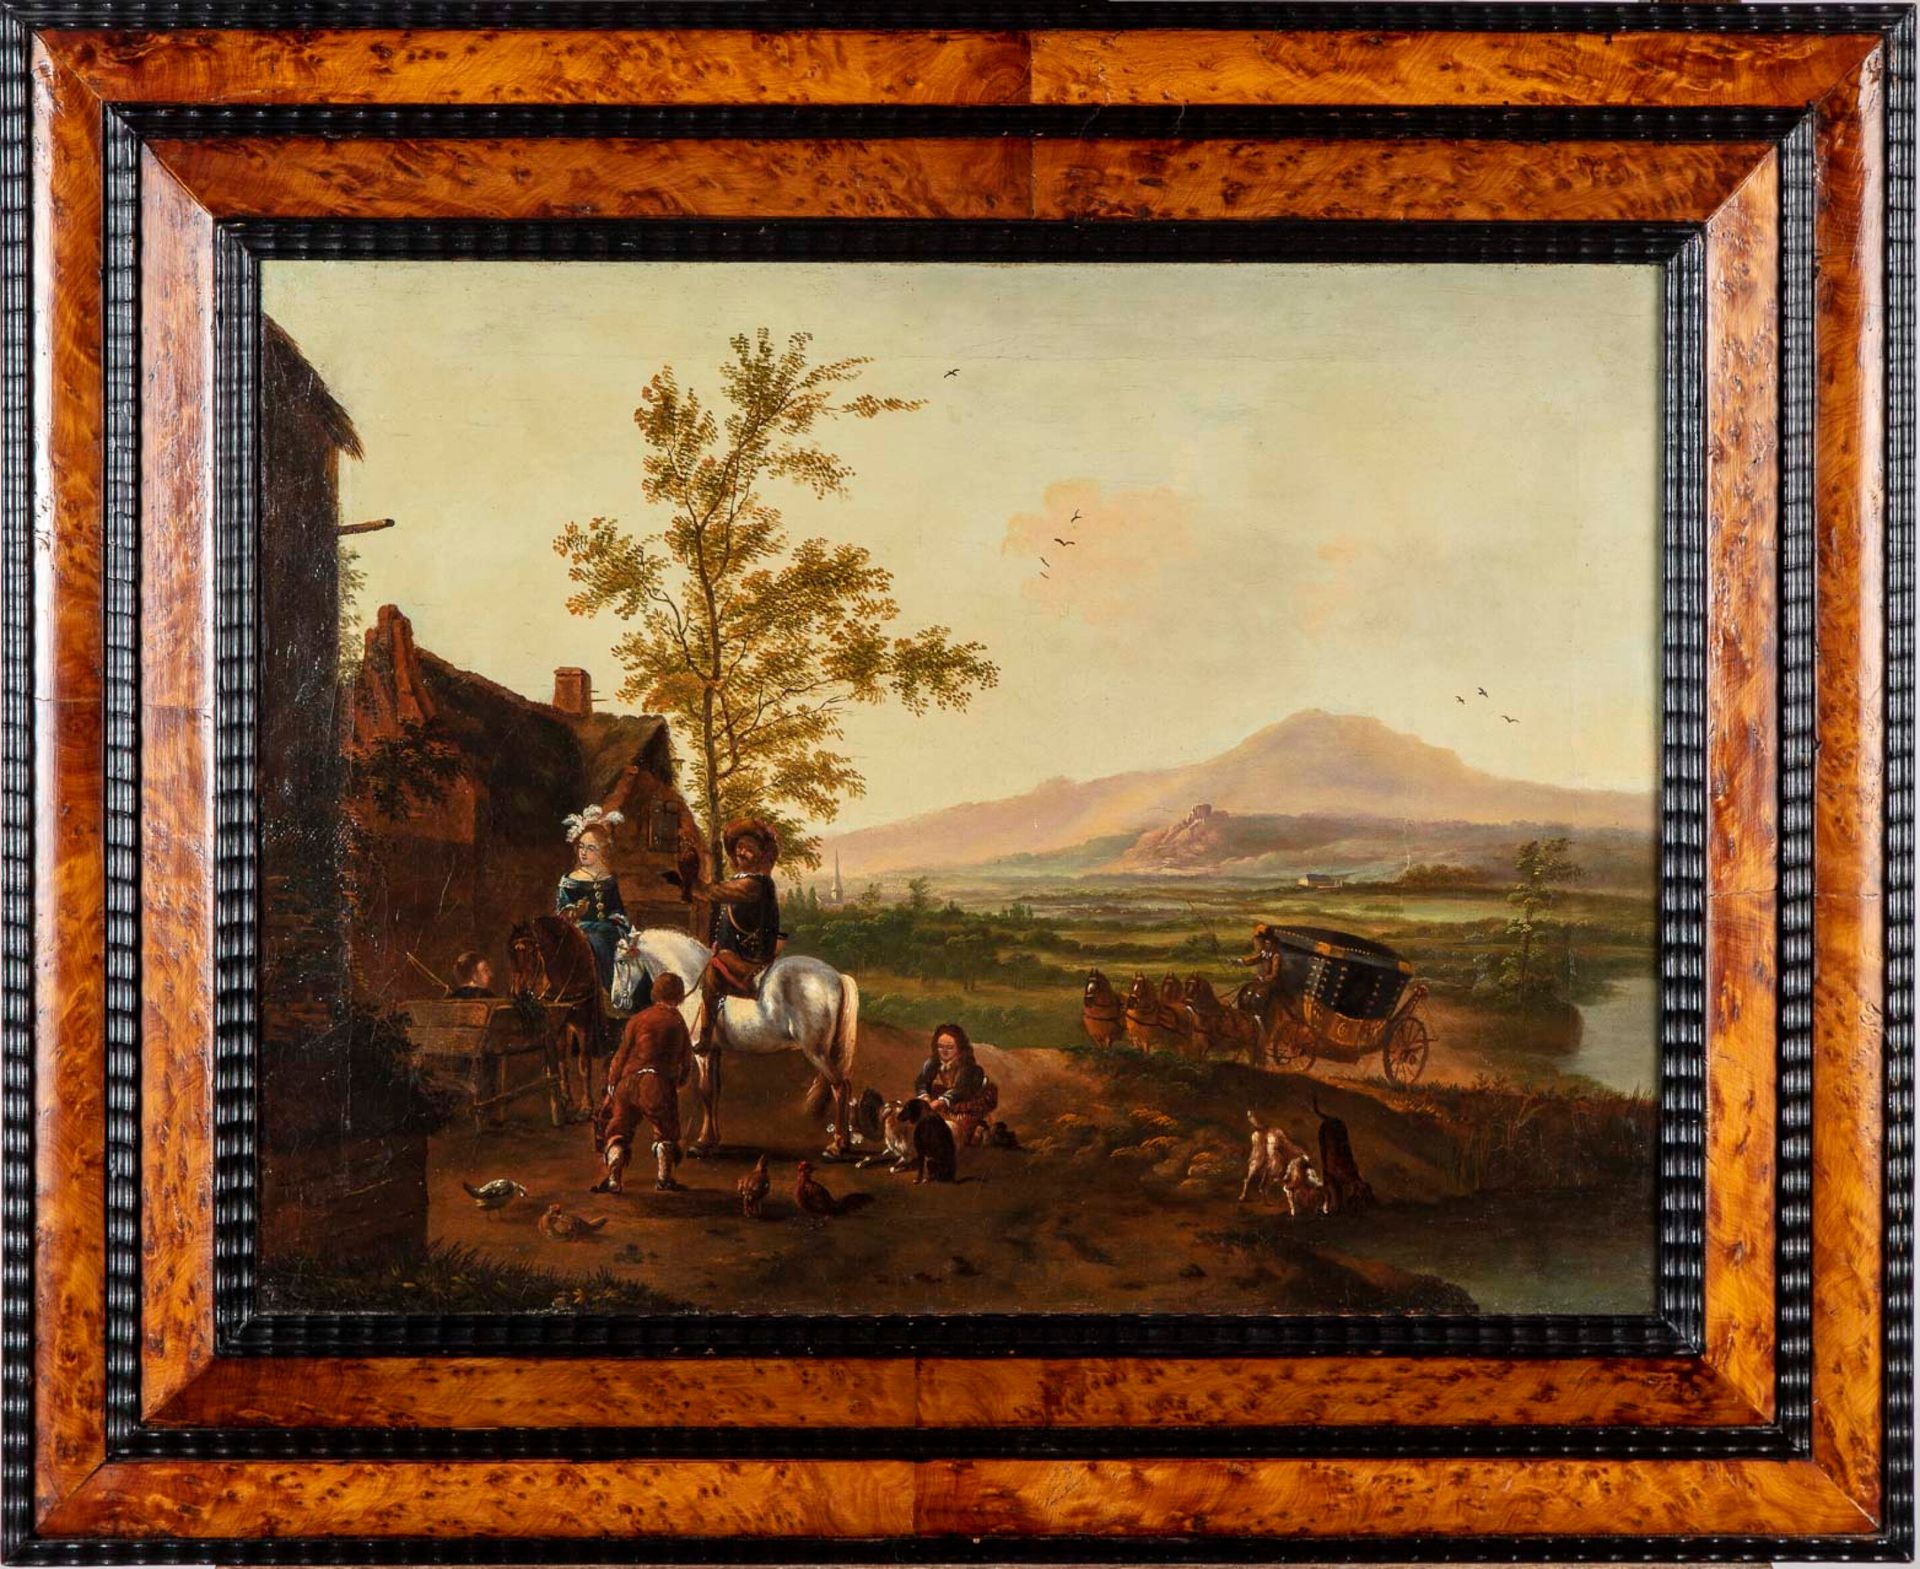 VAN FALENS 卡尔-凡-法伦斯（1683-1733）的风格

出发去猎鹰

布面油画

41 x 54 厘米